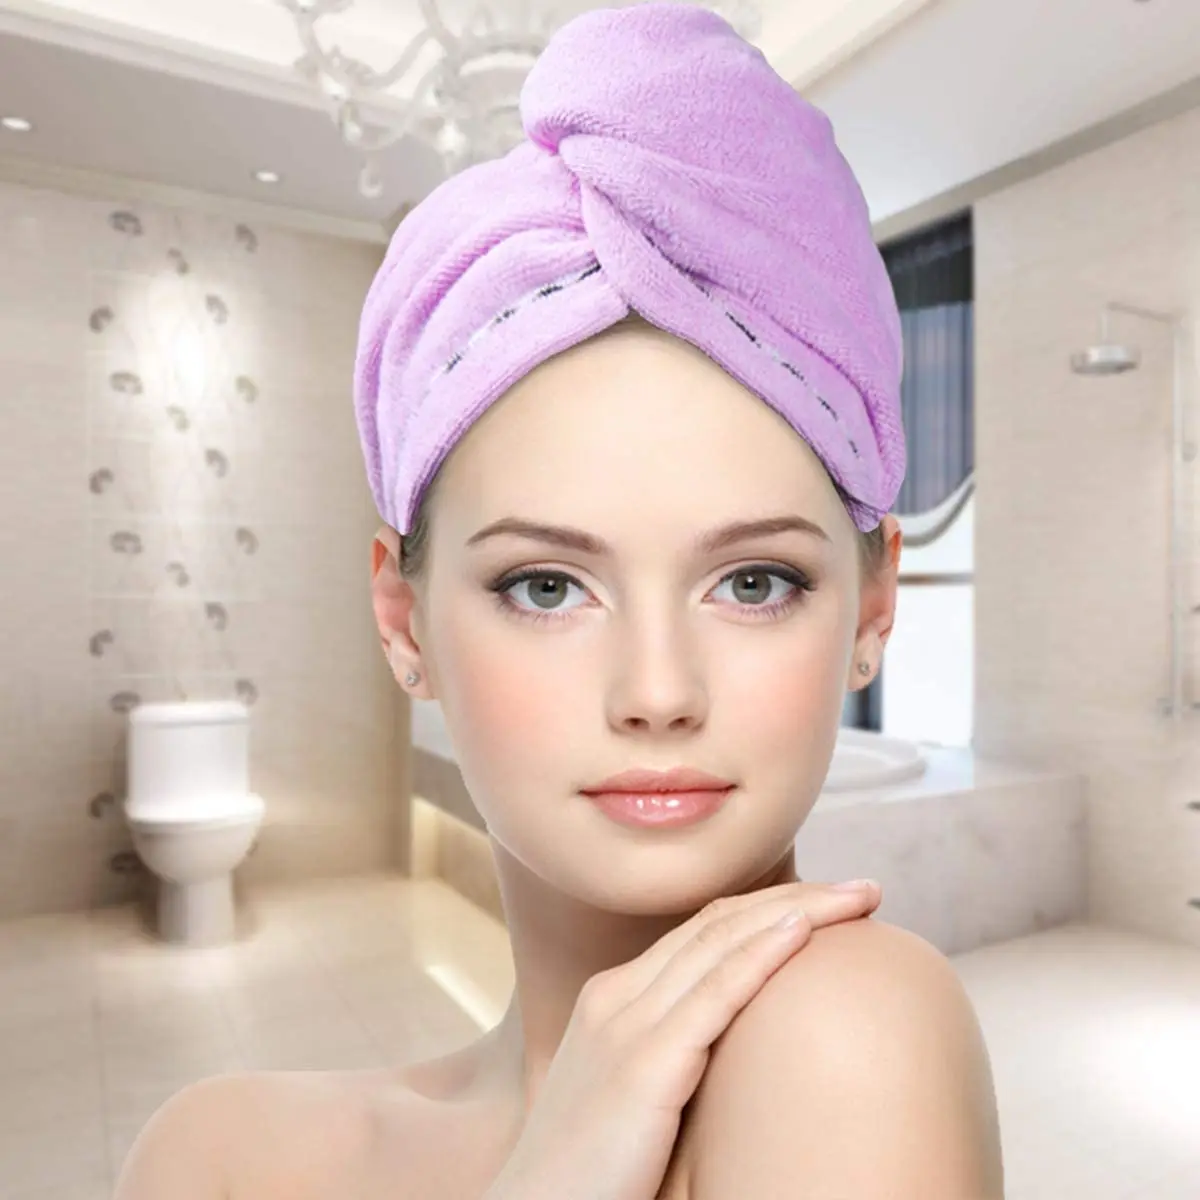 hair drying turban wraps towel_.jpg